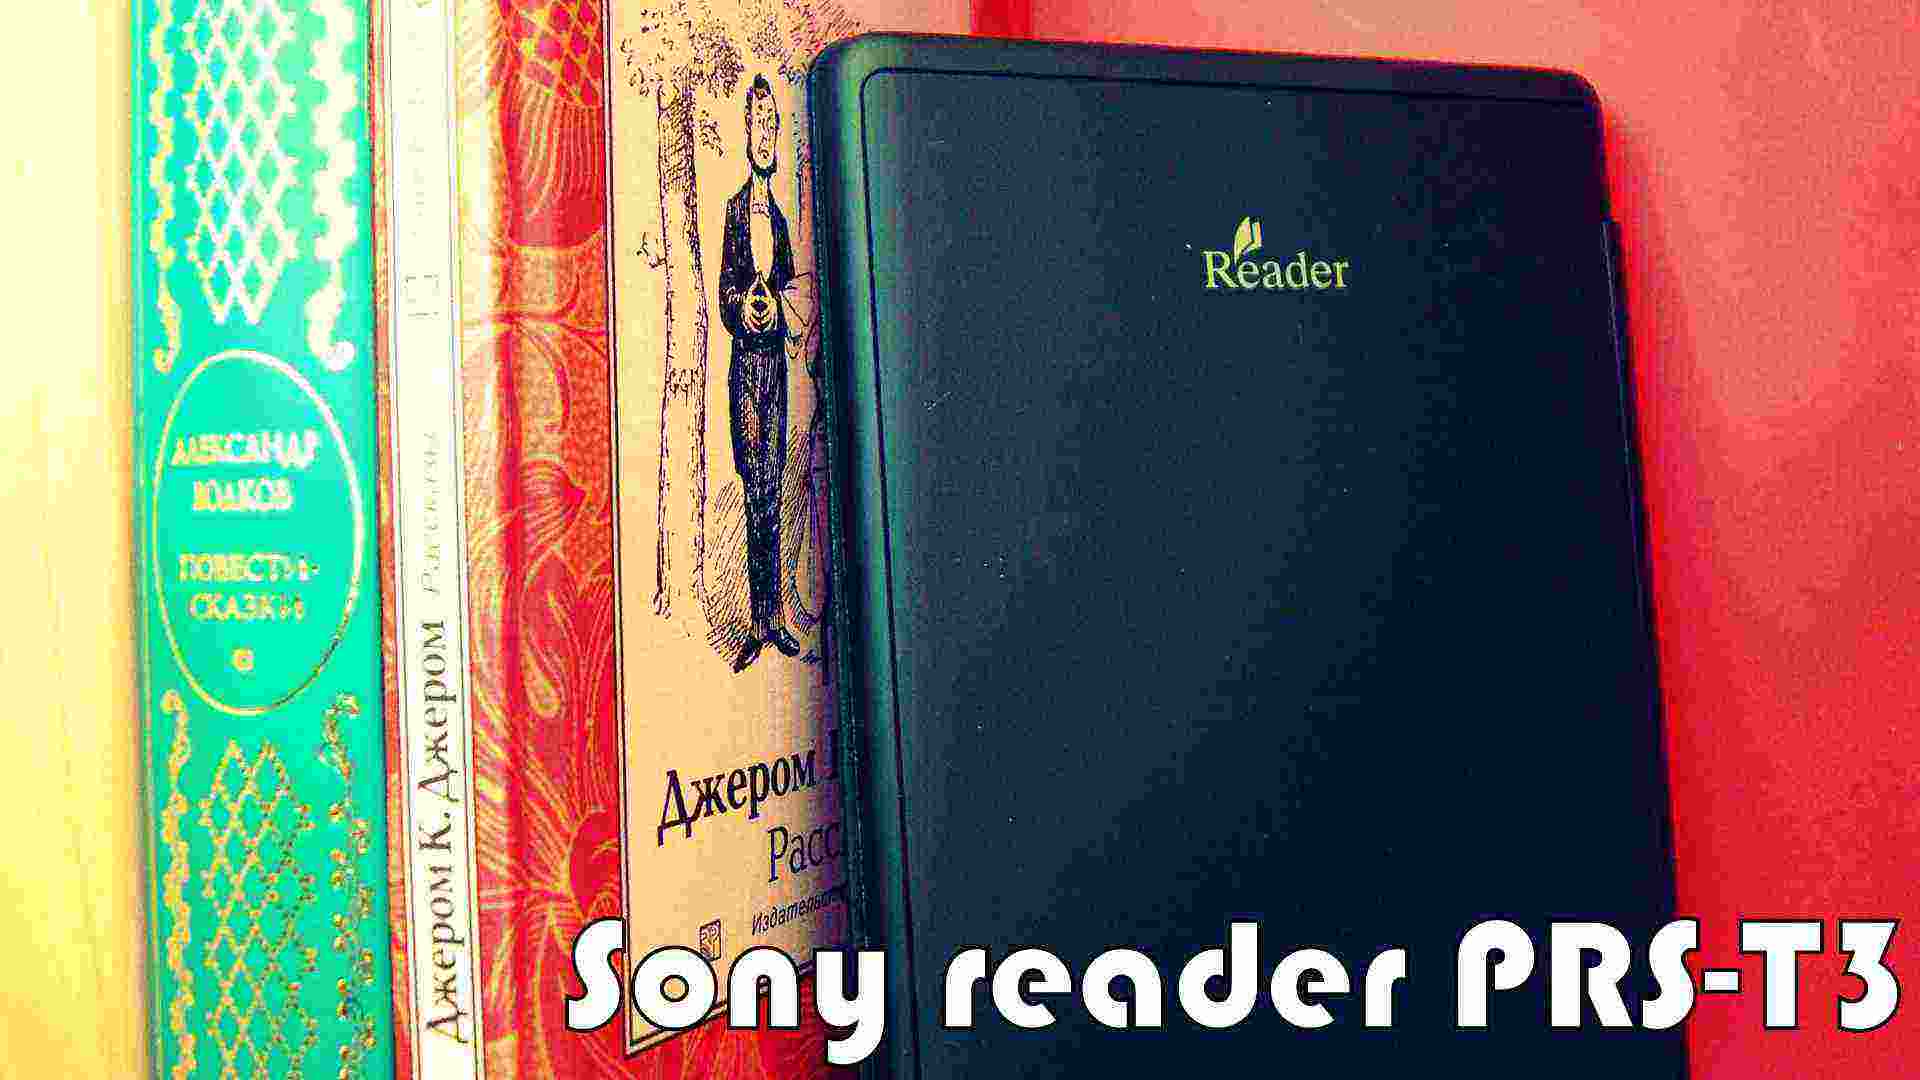 Третья версия читалки от sony. Sony Reader PRS-T3